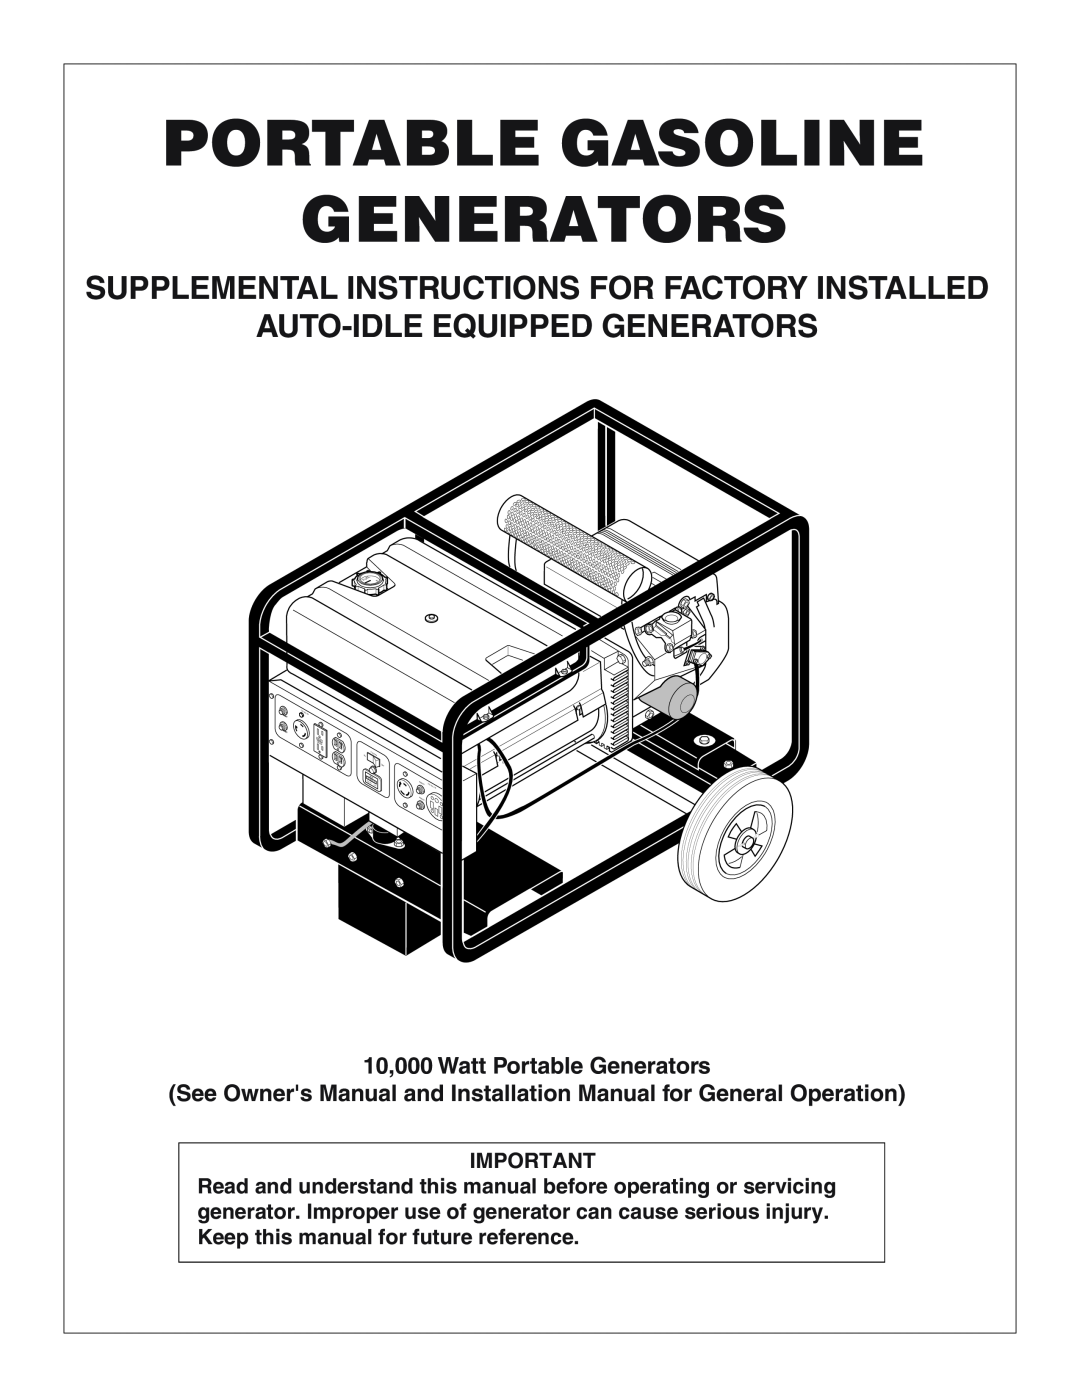 Desa GENERATOR owner manual Portable Gasoline Generators, Supplemental Instructions For Factory Installed, Auto-Id, Eset 